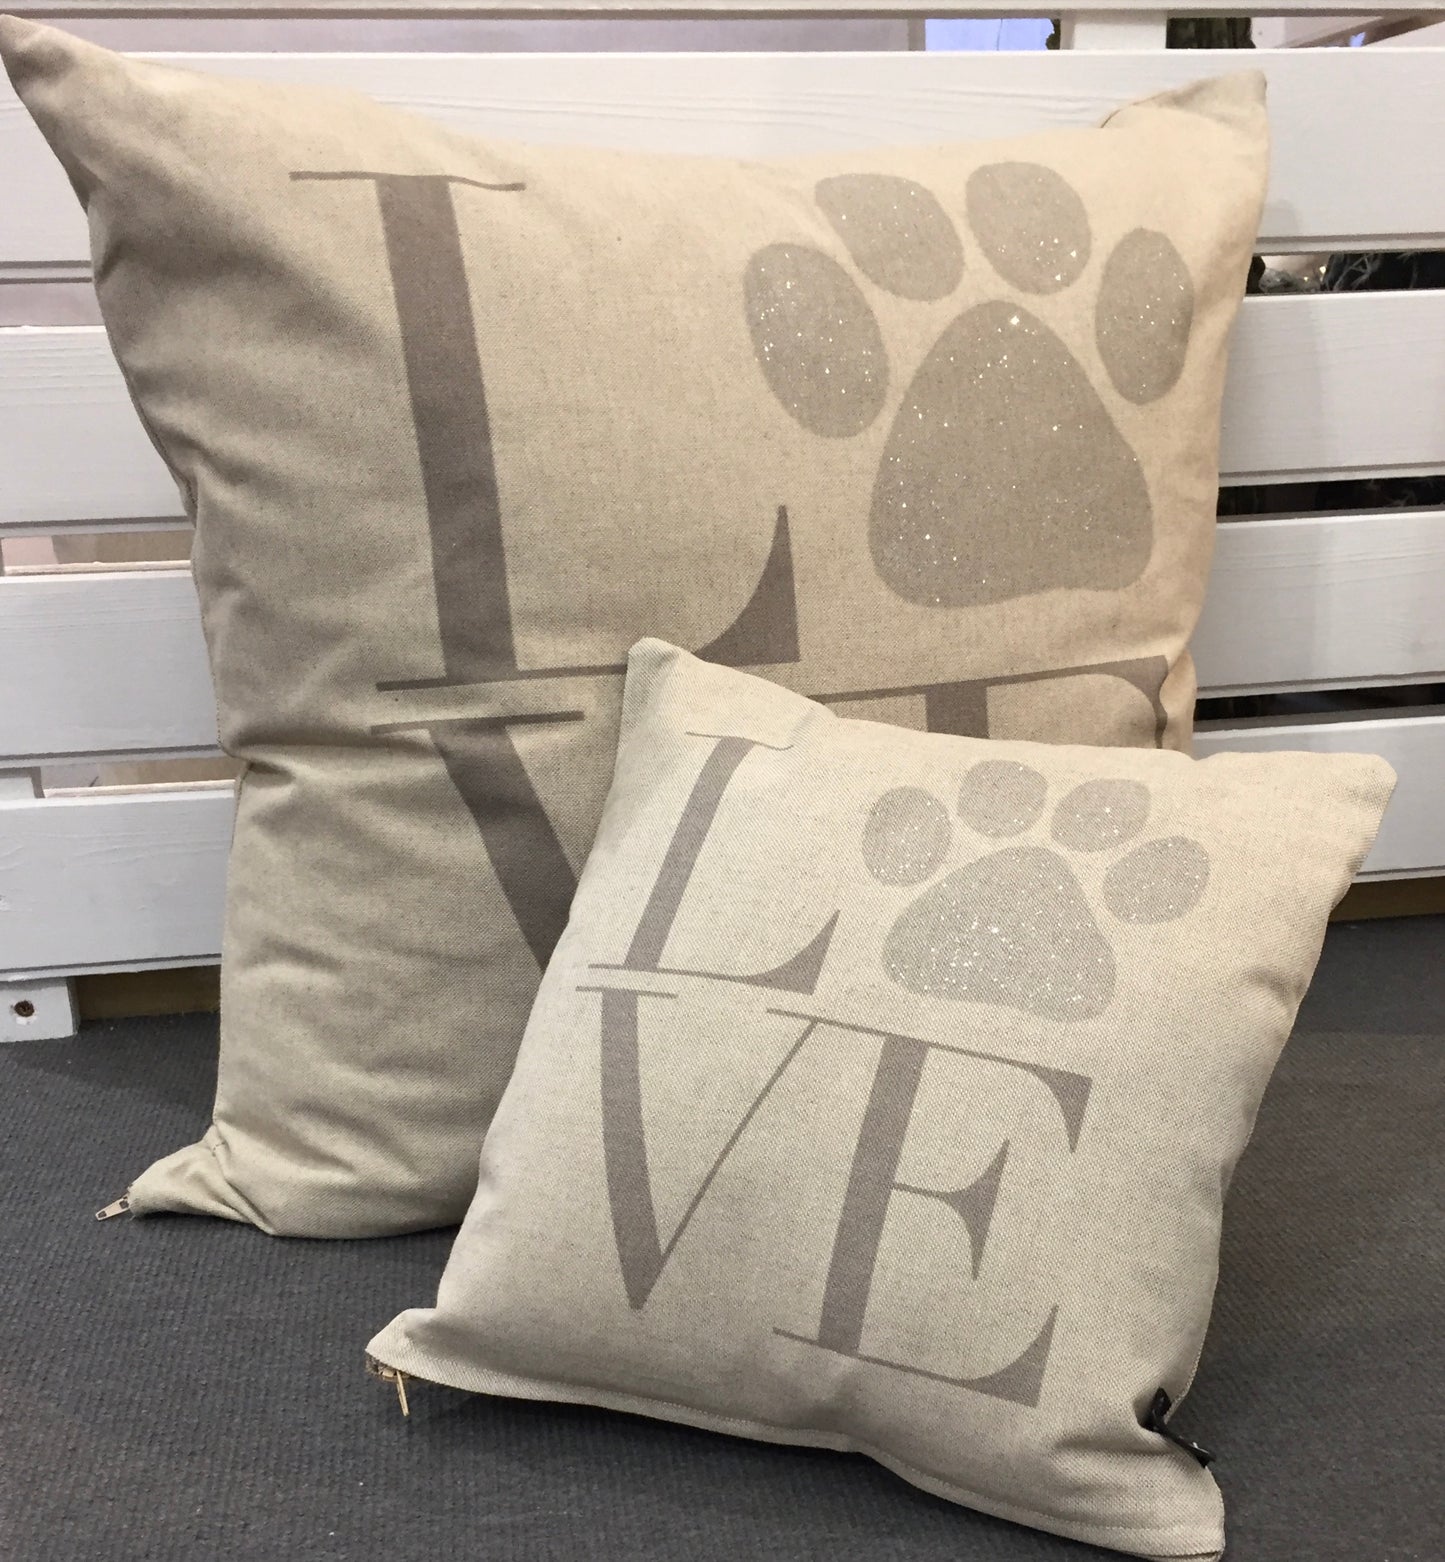 Paw Print LOVE Dog or Cat  grey Cushion